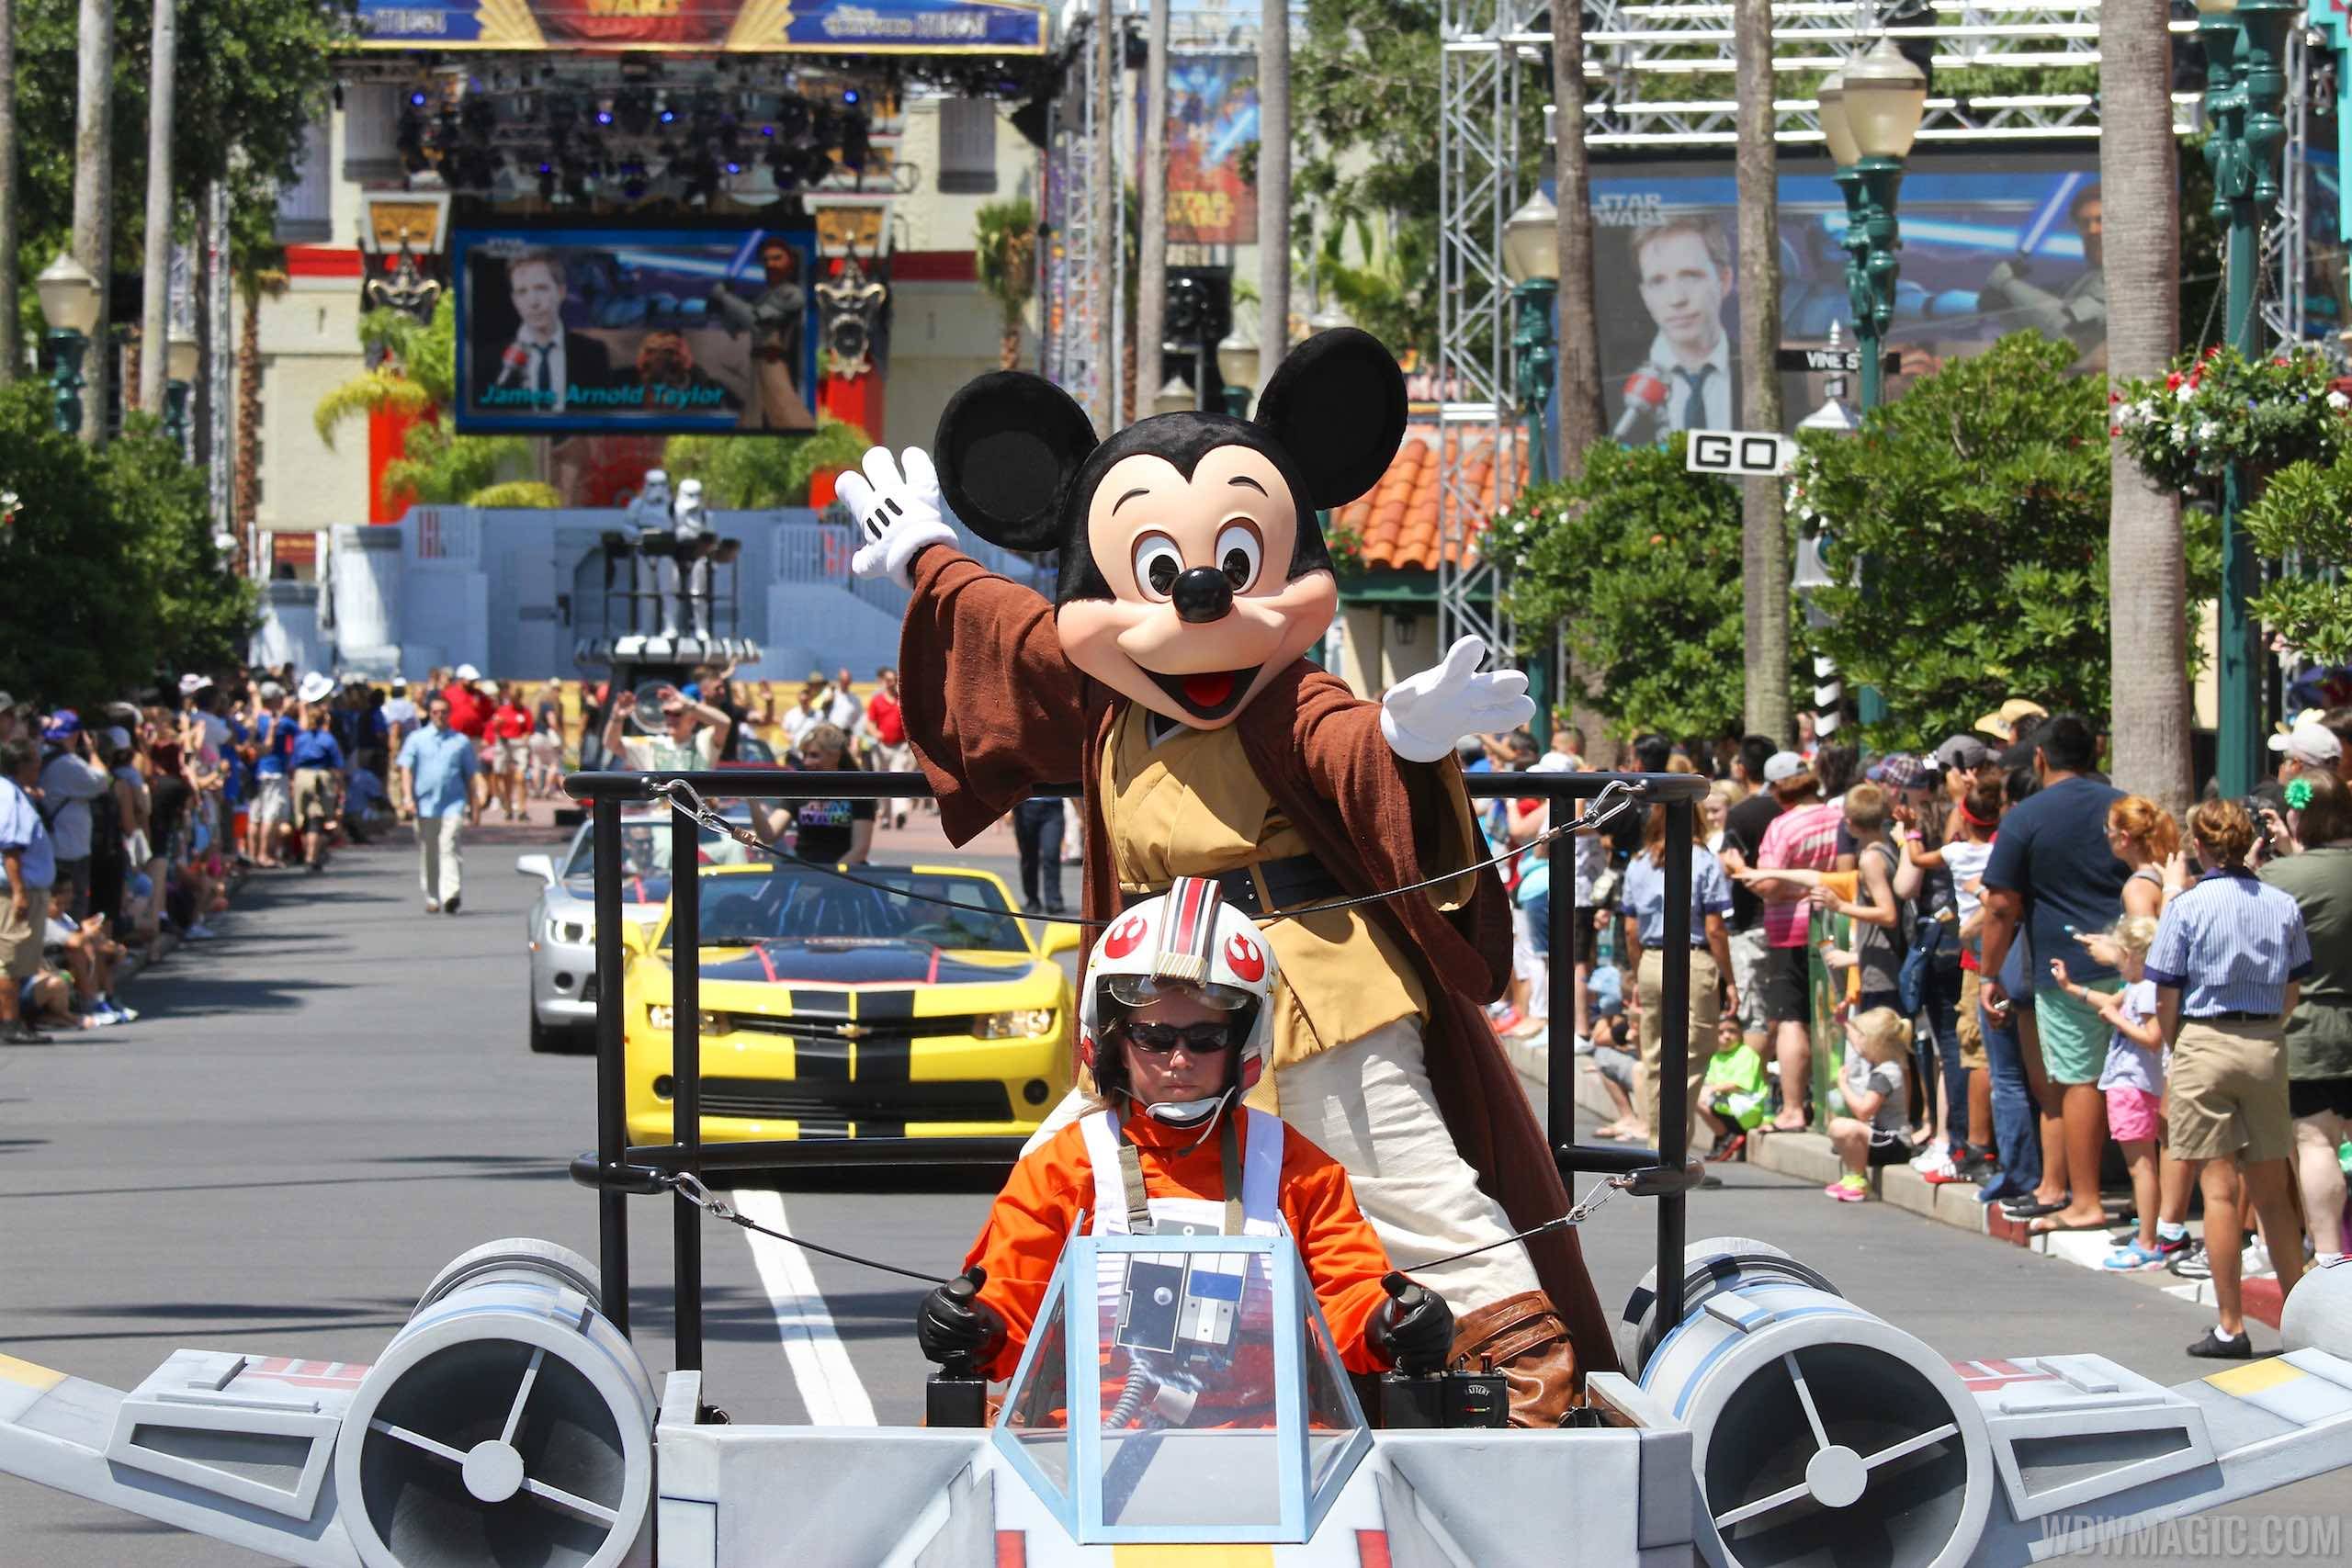 2015 Star Wars Weekends - Weekend 4 Legends of the Force motorcade celebrities - Jedi Mickey